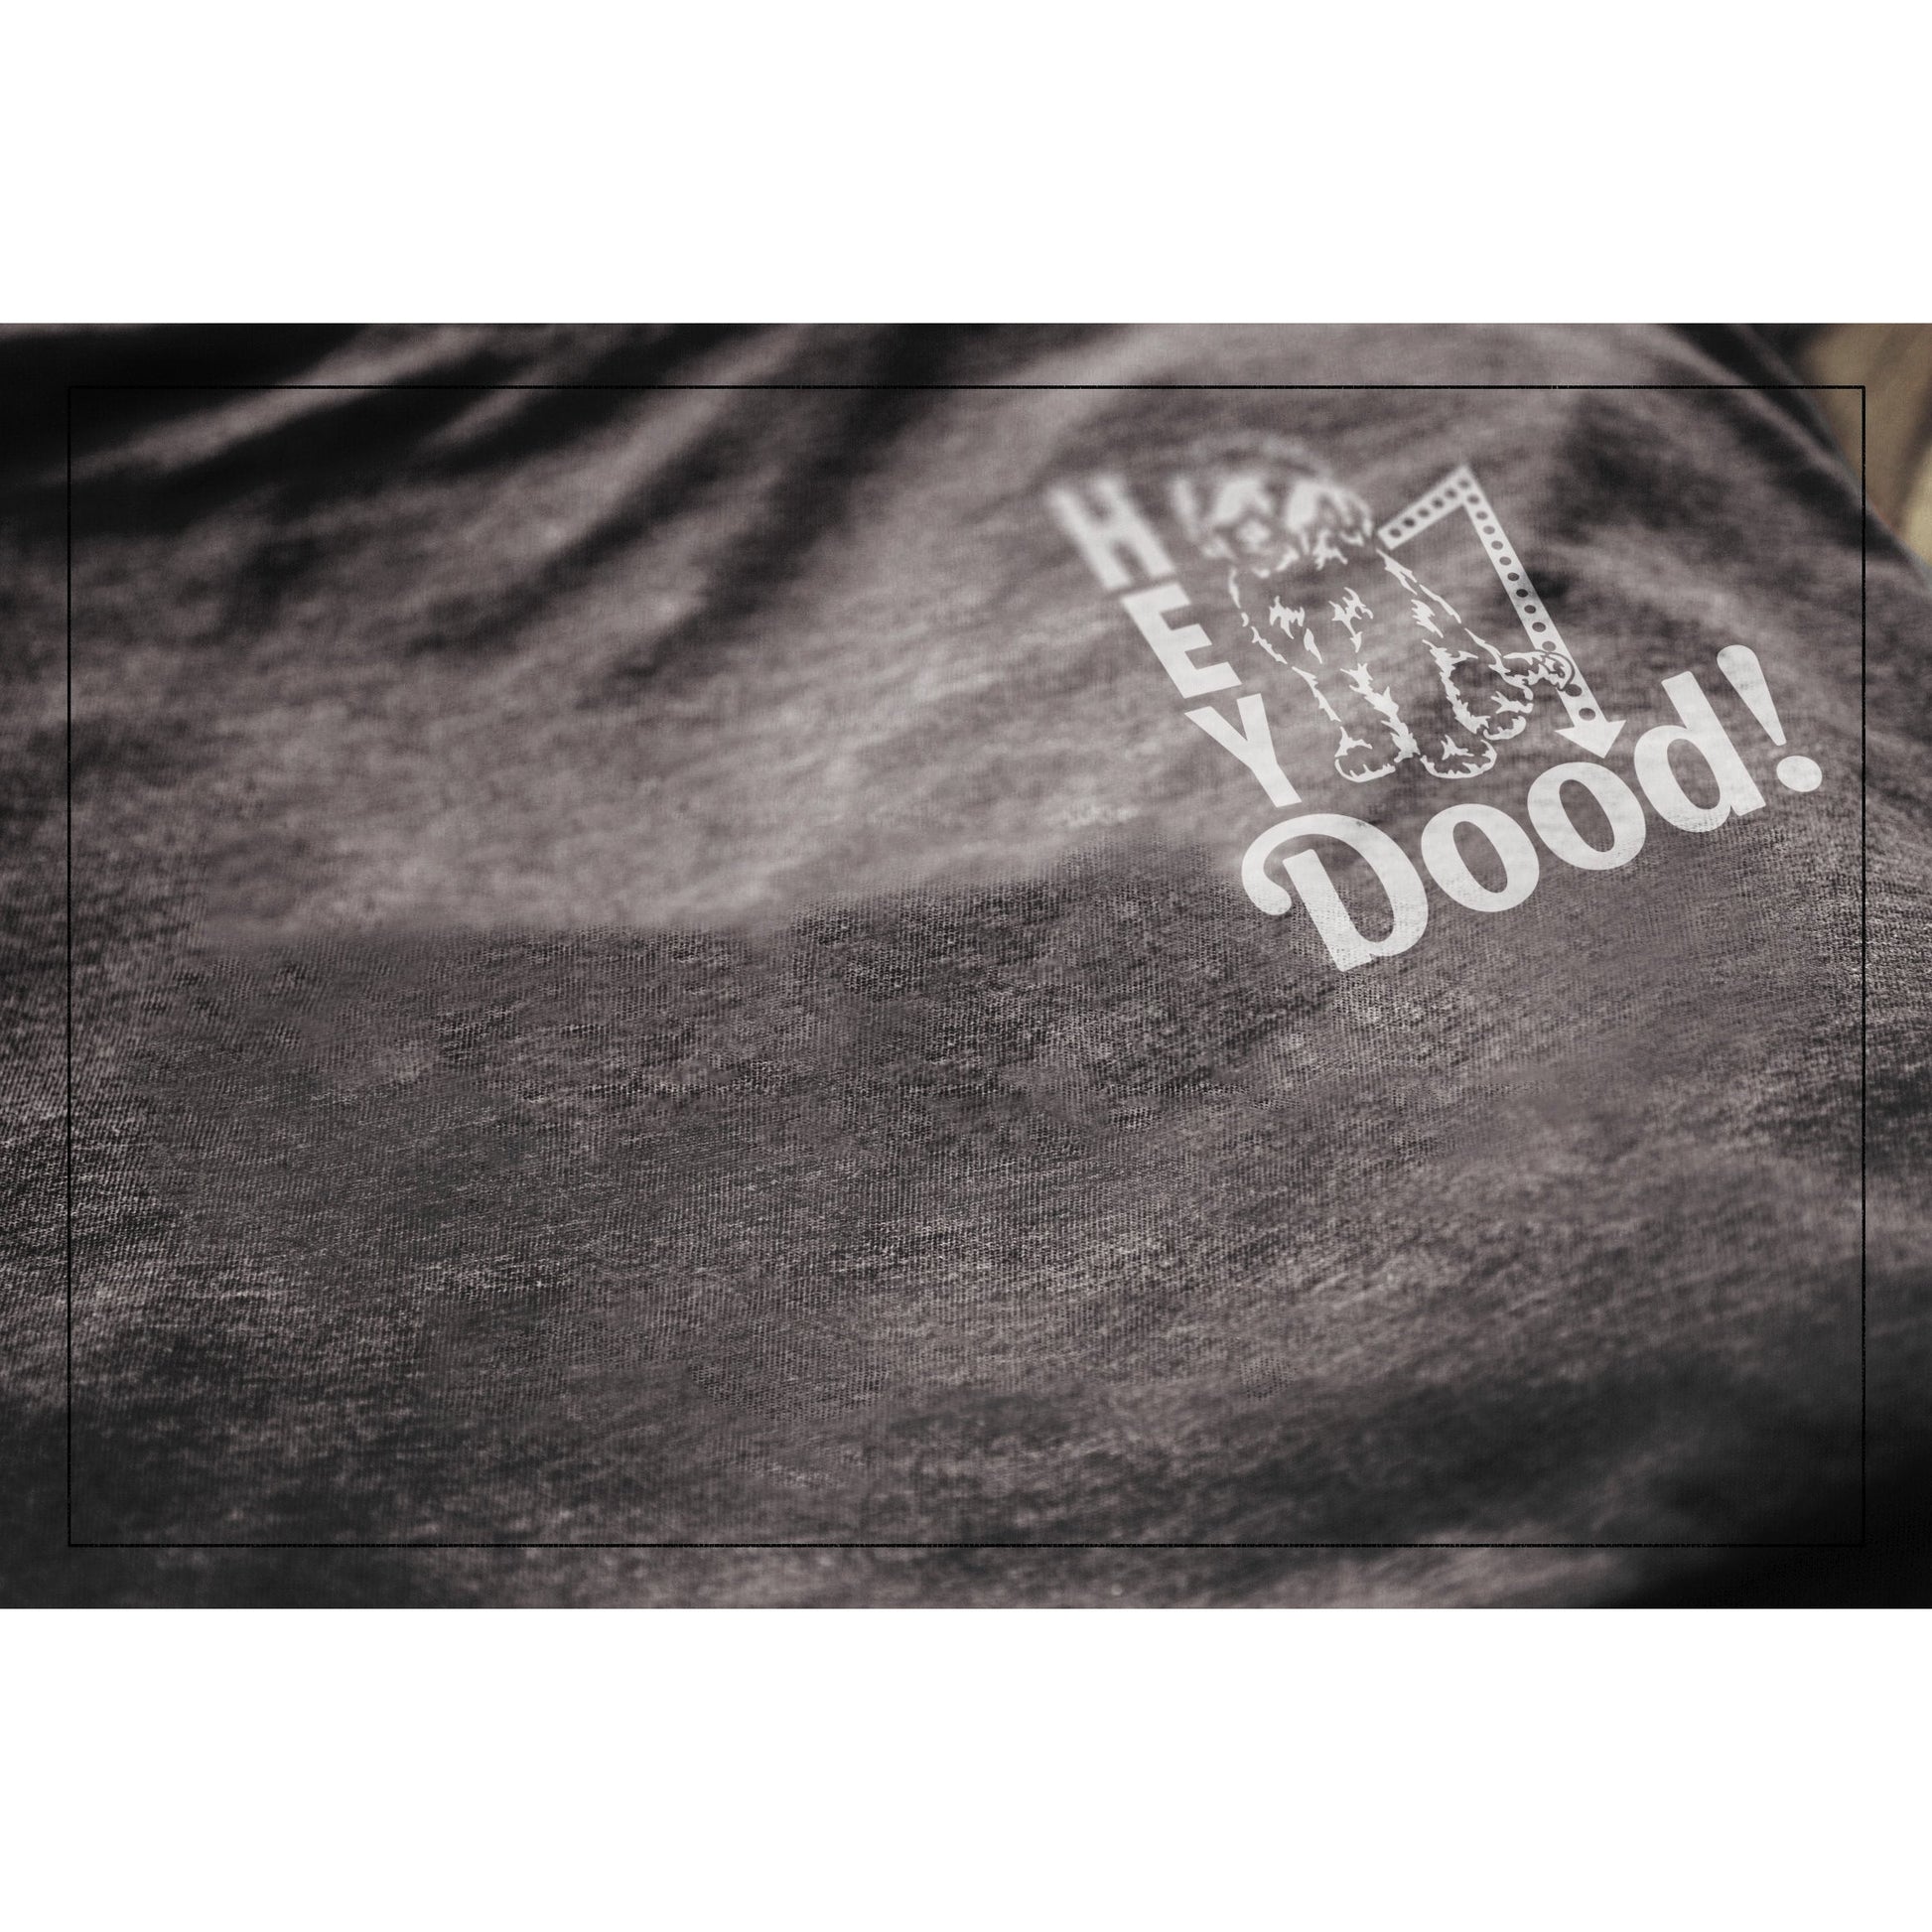 Hey Doodle Dog Charcoal Printed Graphic Men's Crew T-Shirt Closeup Details